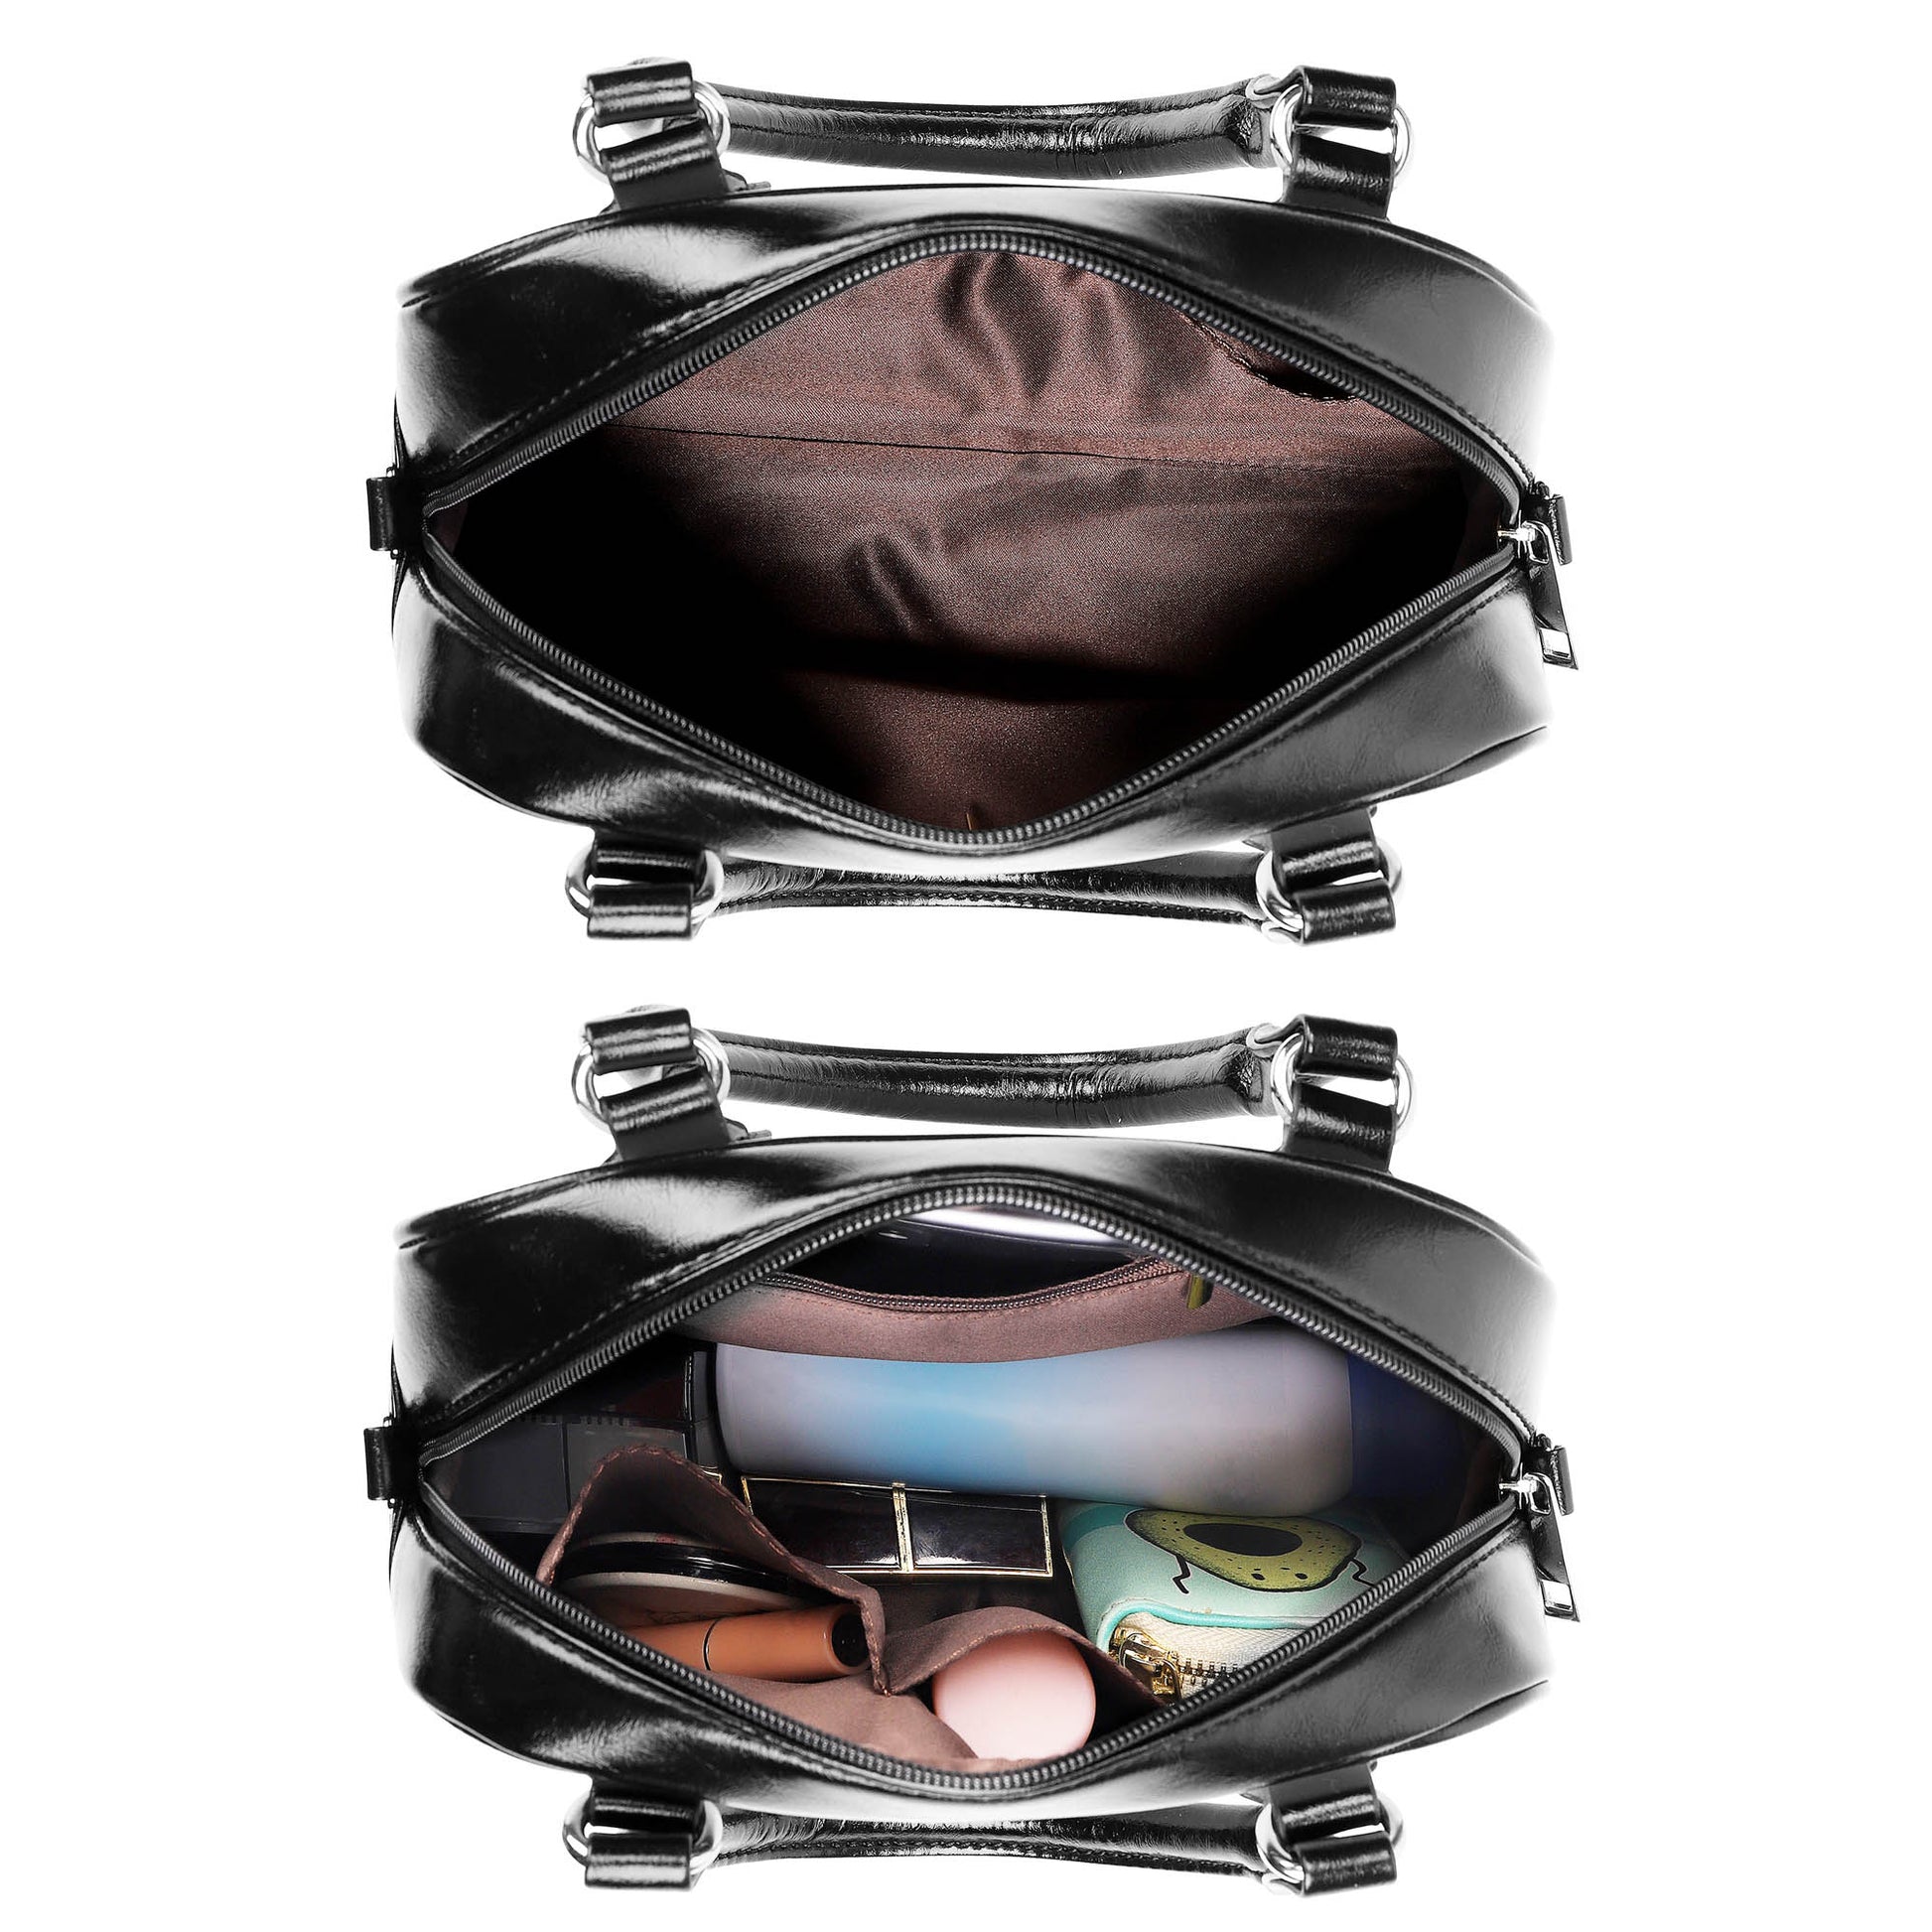 MacArthur Modern Tartan Shoulder Handbags - Tartanvibesclothing